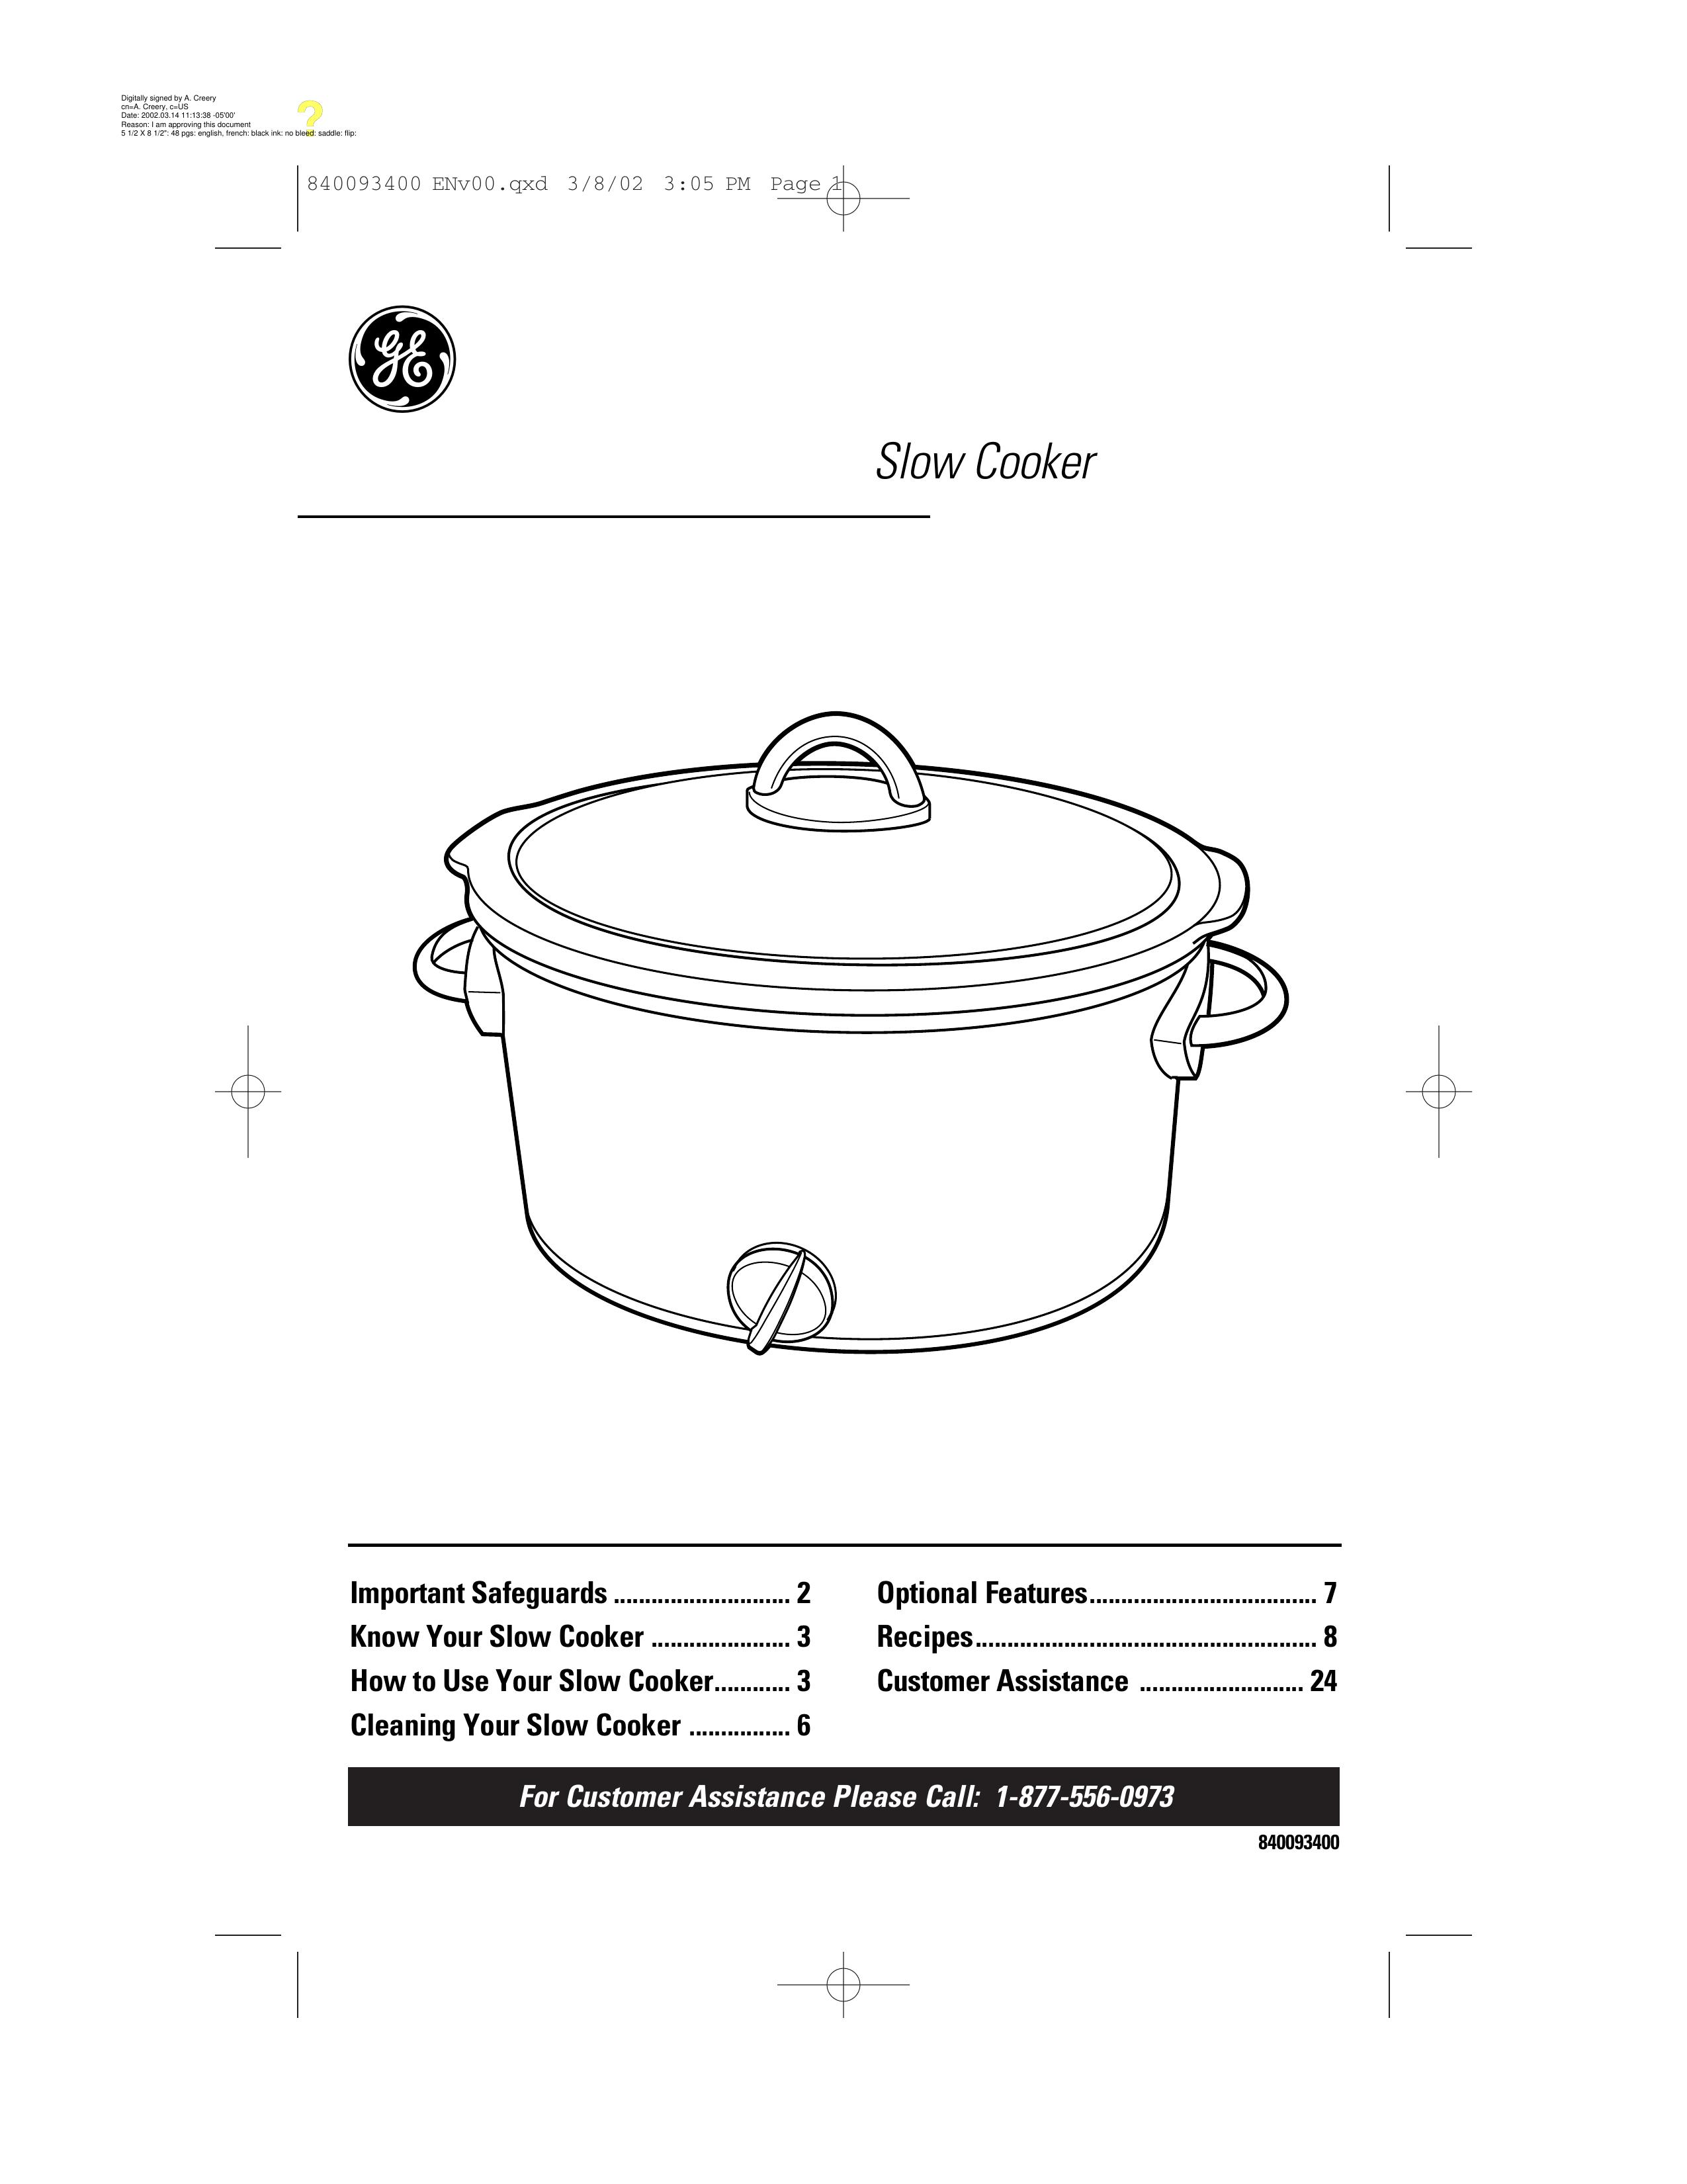 GE 840093400 Slow Cooker User Manual